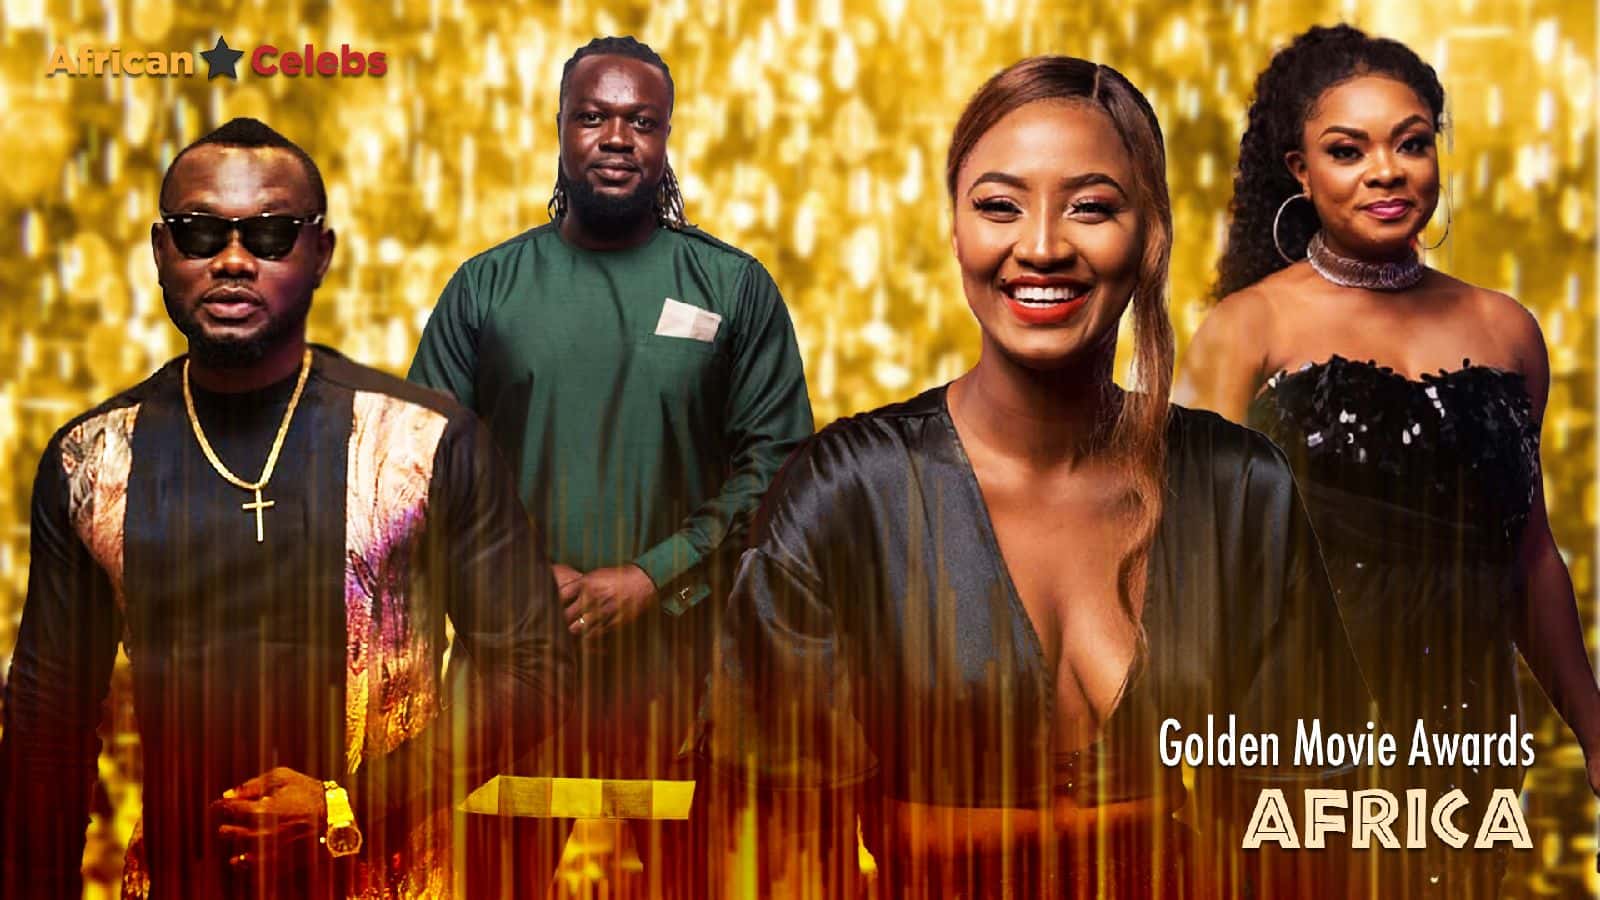 African Celebs Golden Movie Awards Ghana - Red Carpet